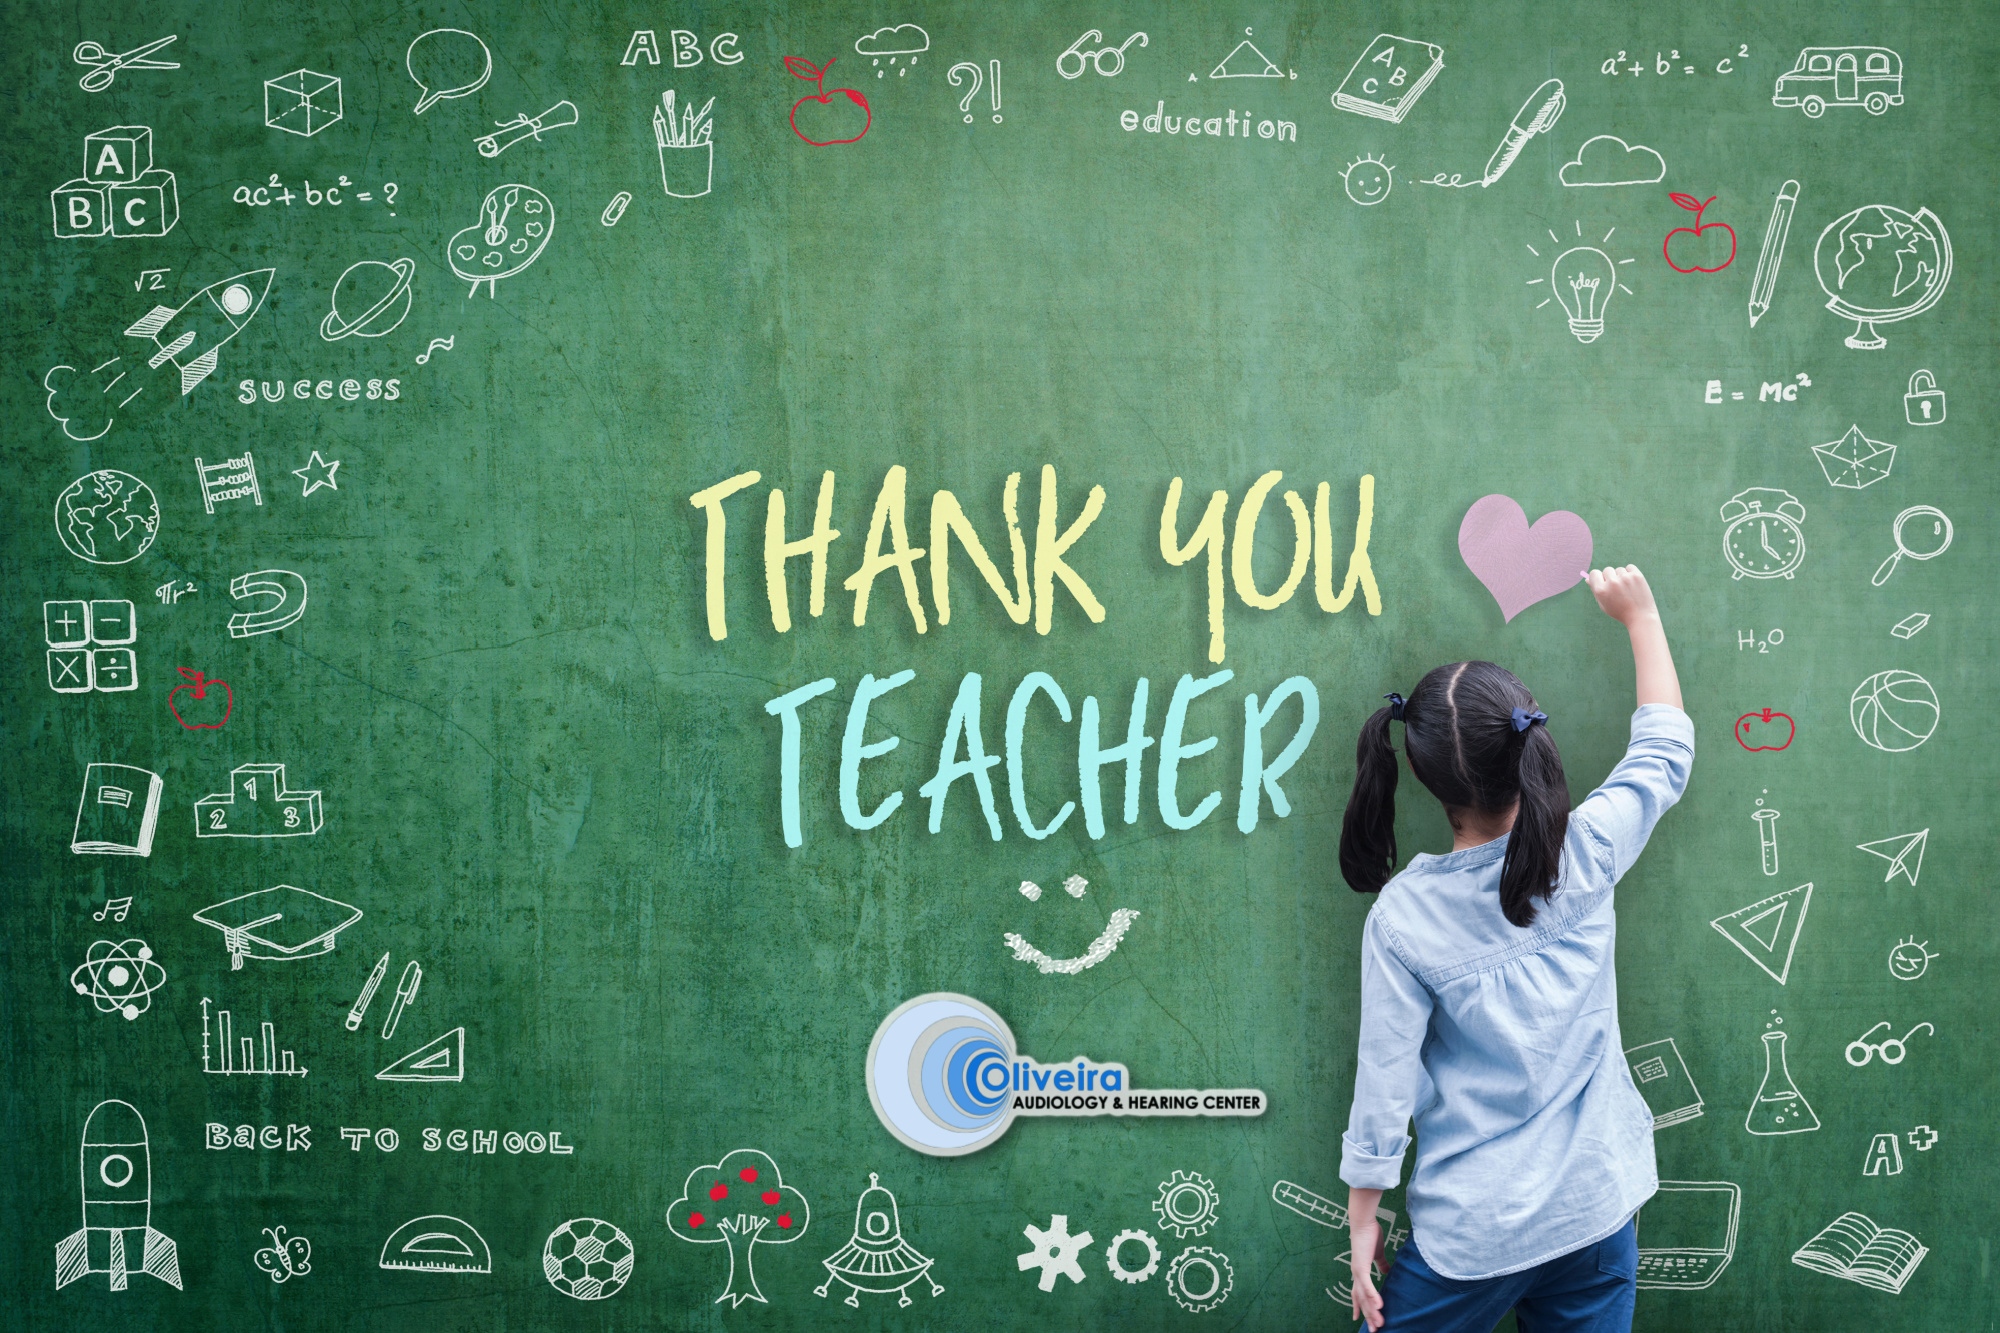 Happy Teachers Day - thank you